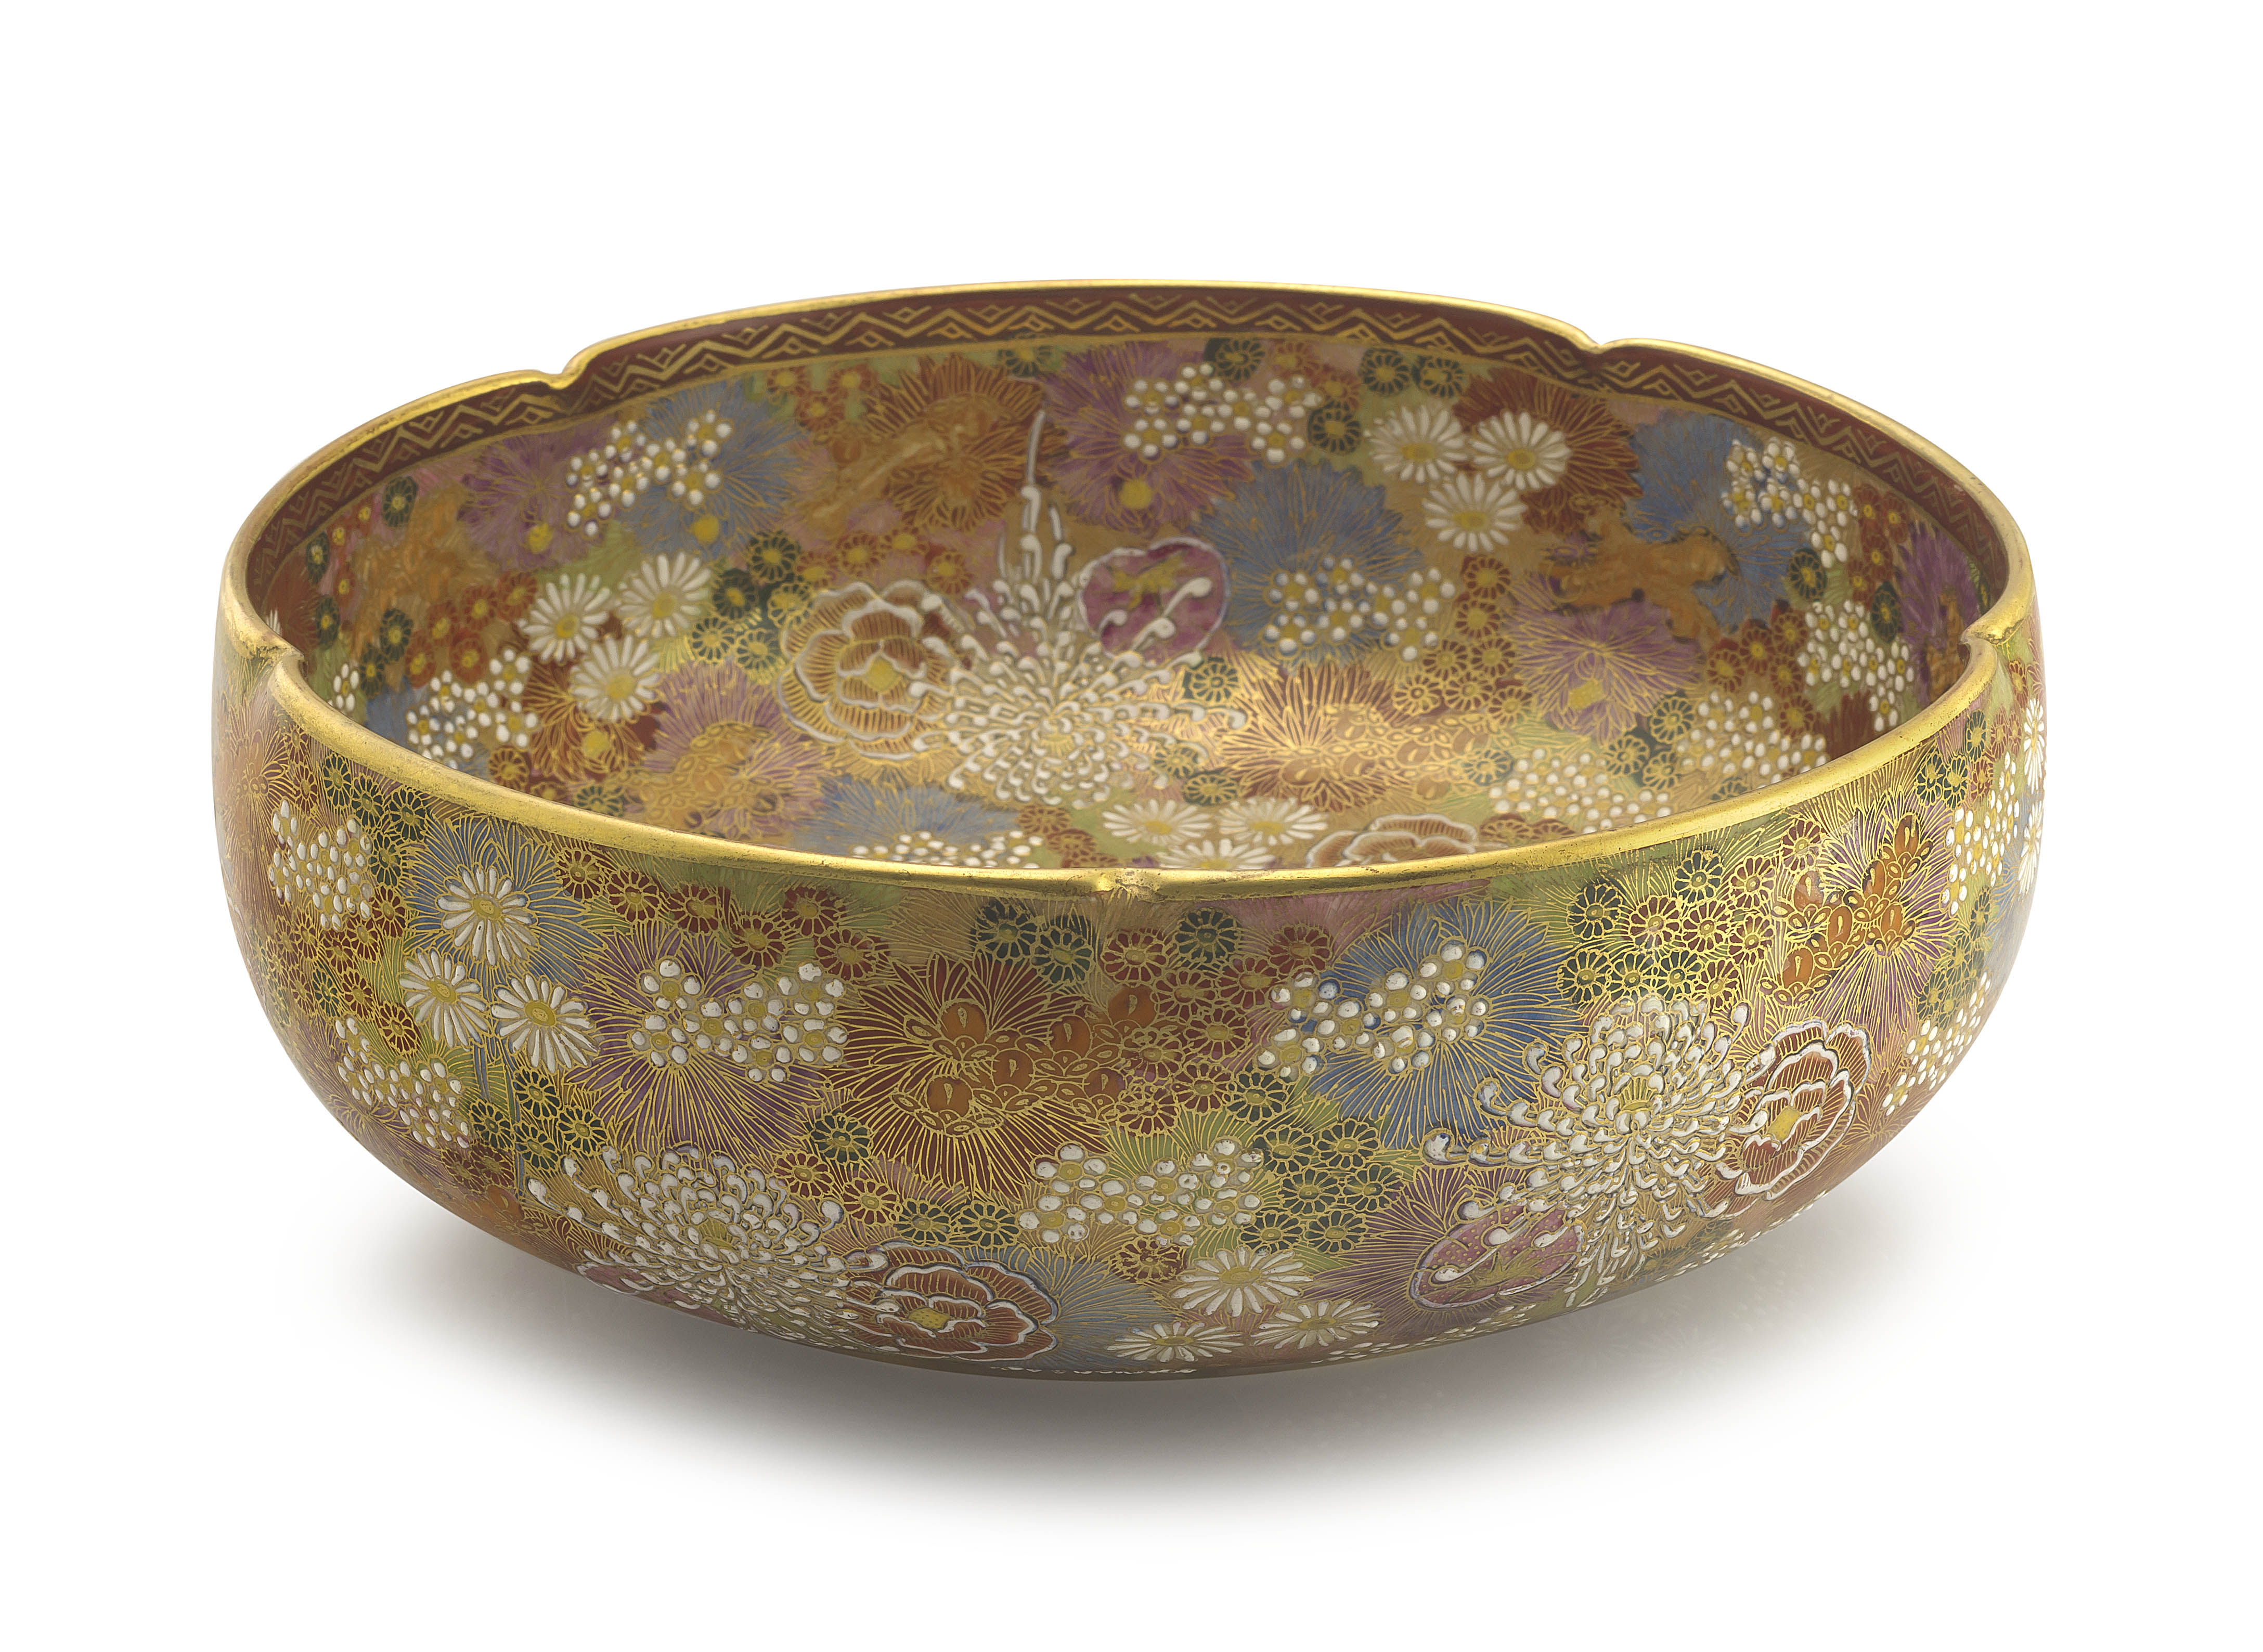 A Japanese Satsuma bowl, Meiji period, 1868-1912